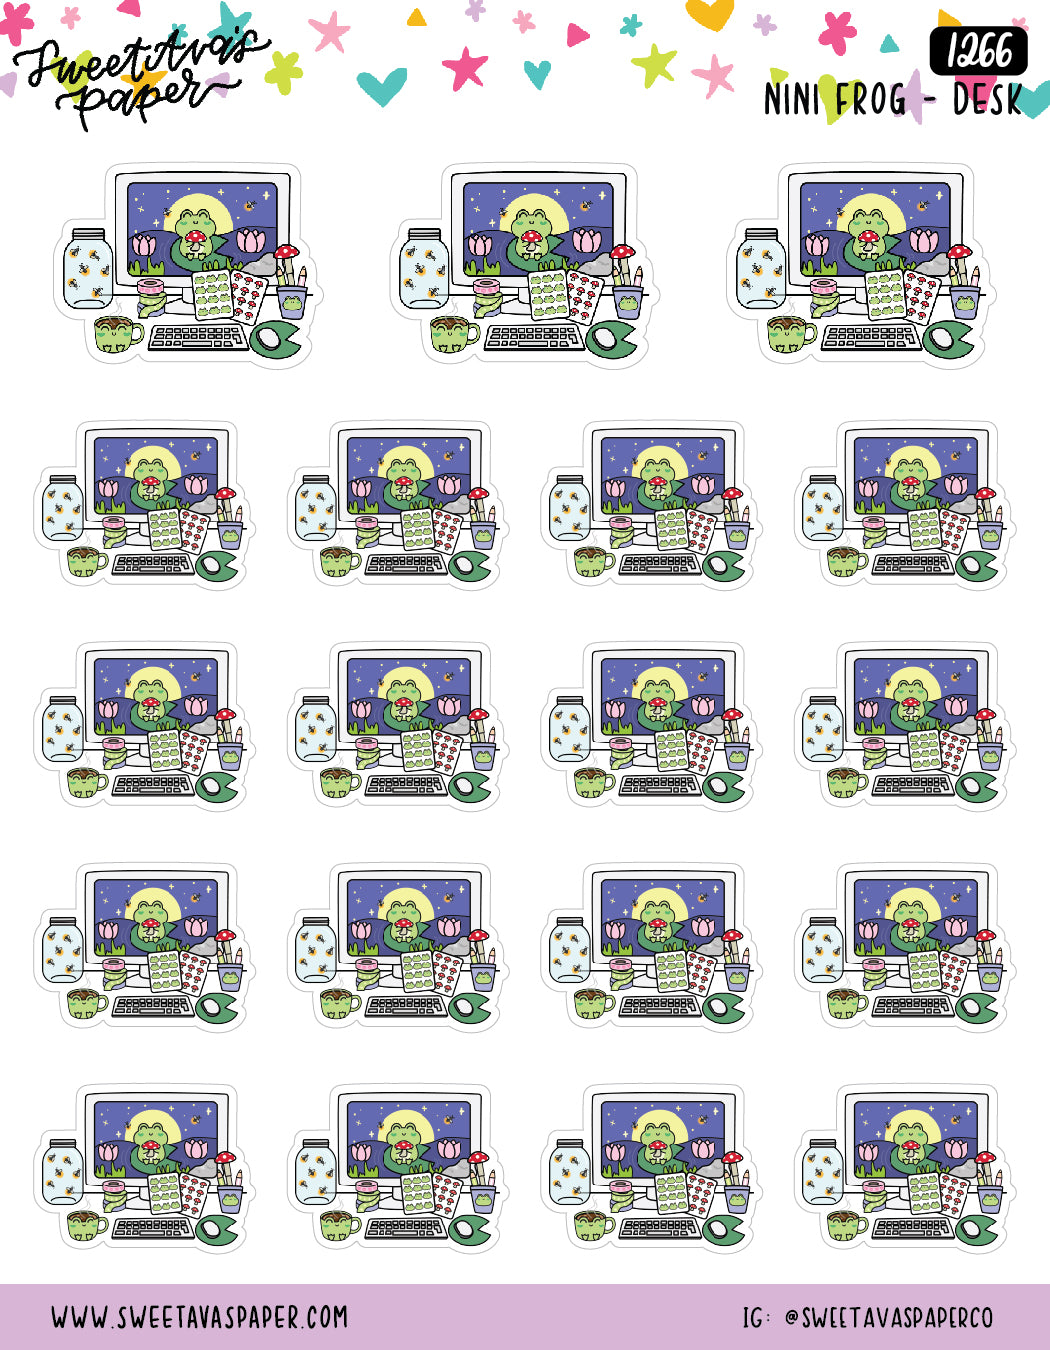 Pond Desktop Planner Stickers - Icon Stickers - Nini Frog - [1266]